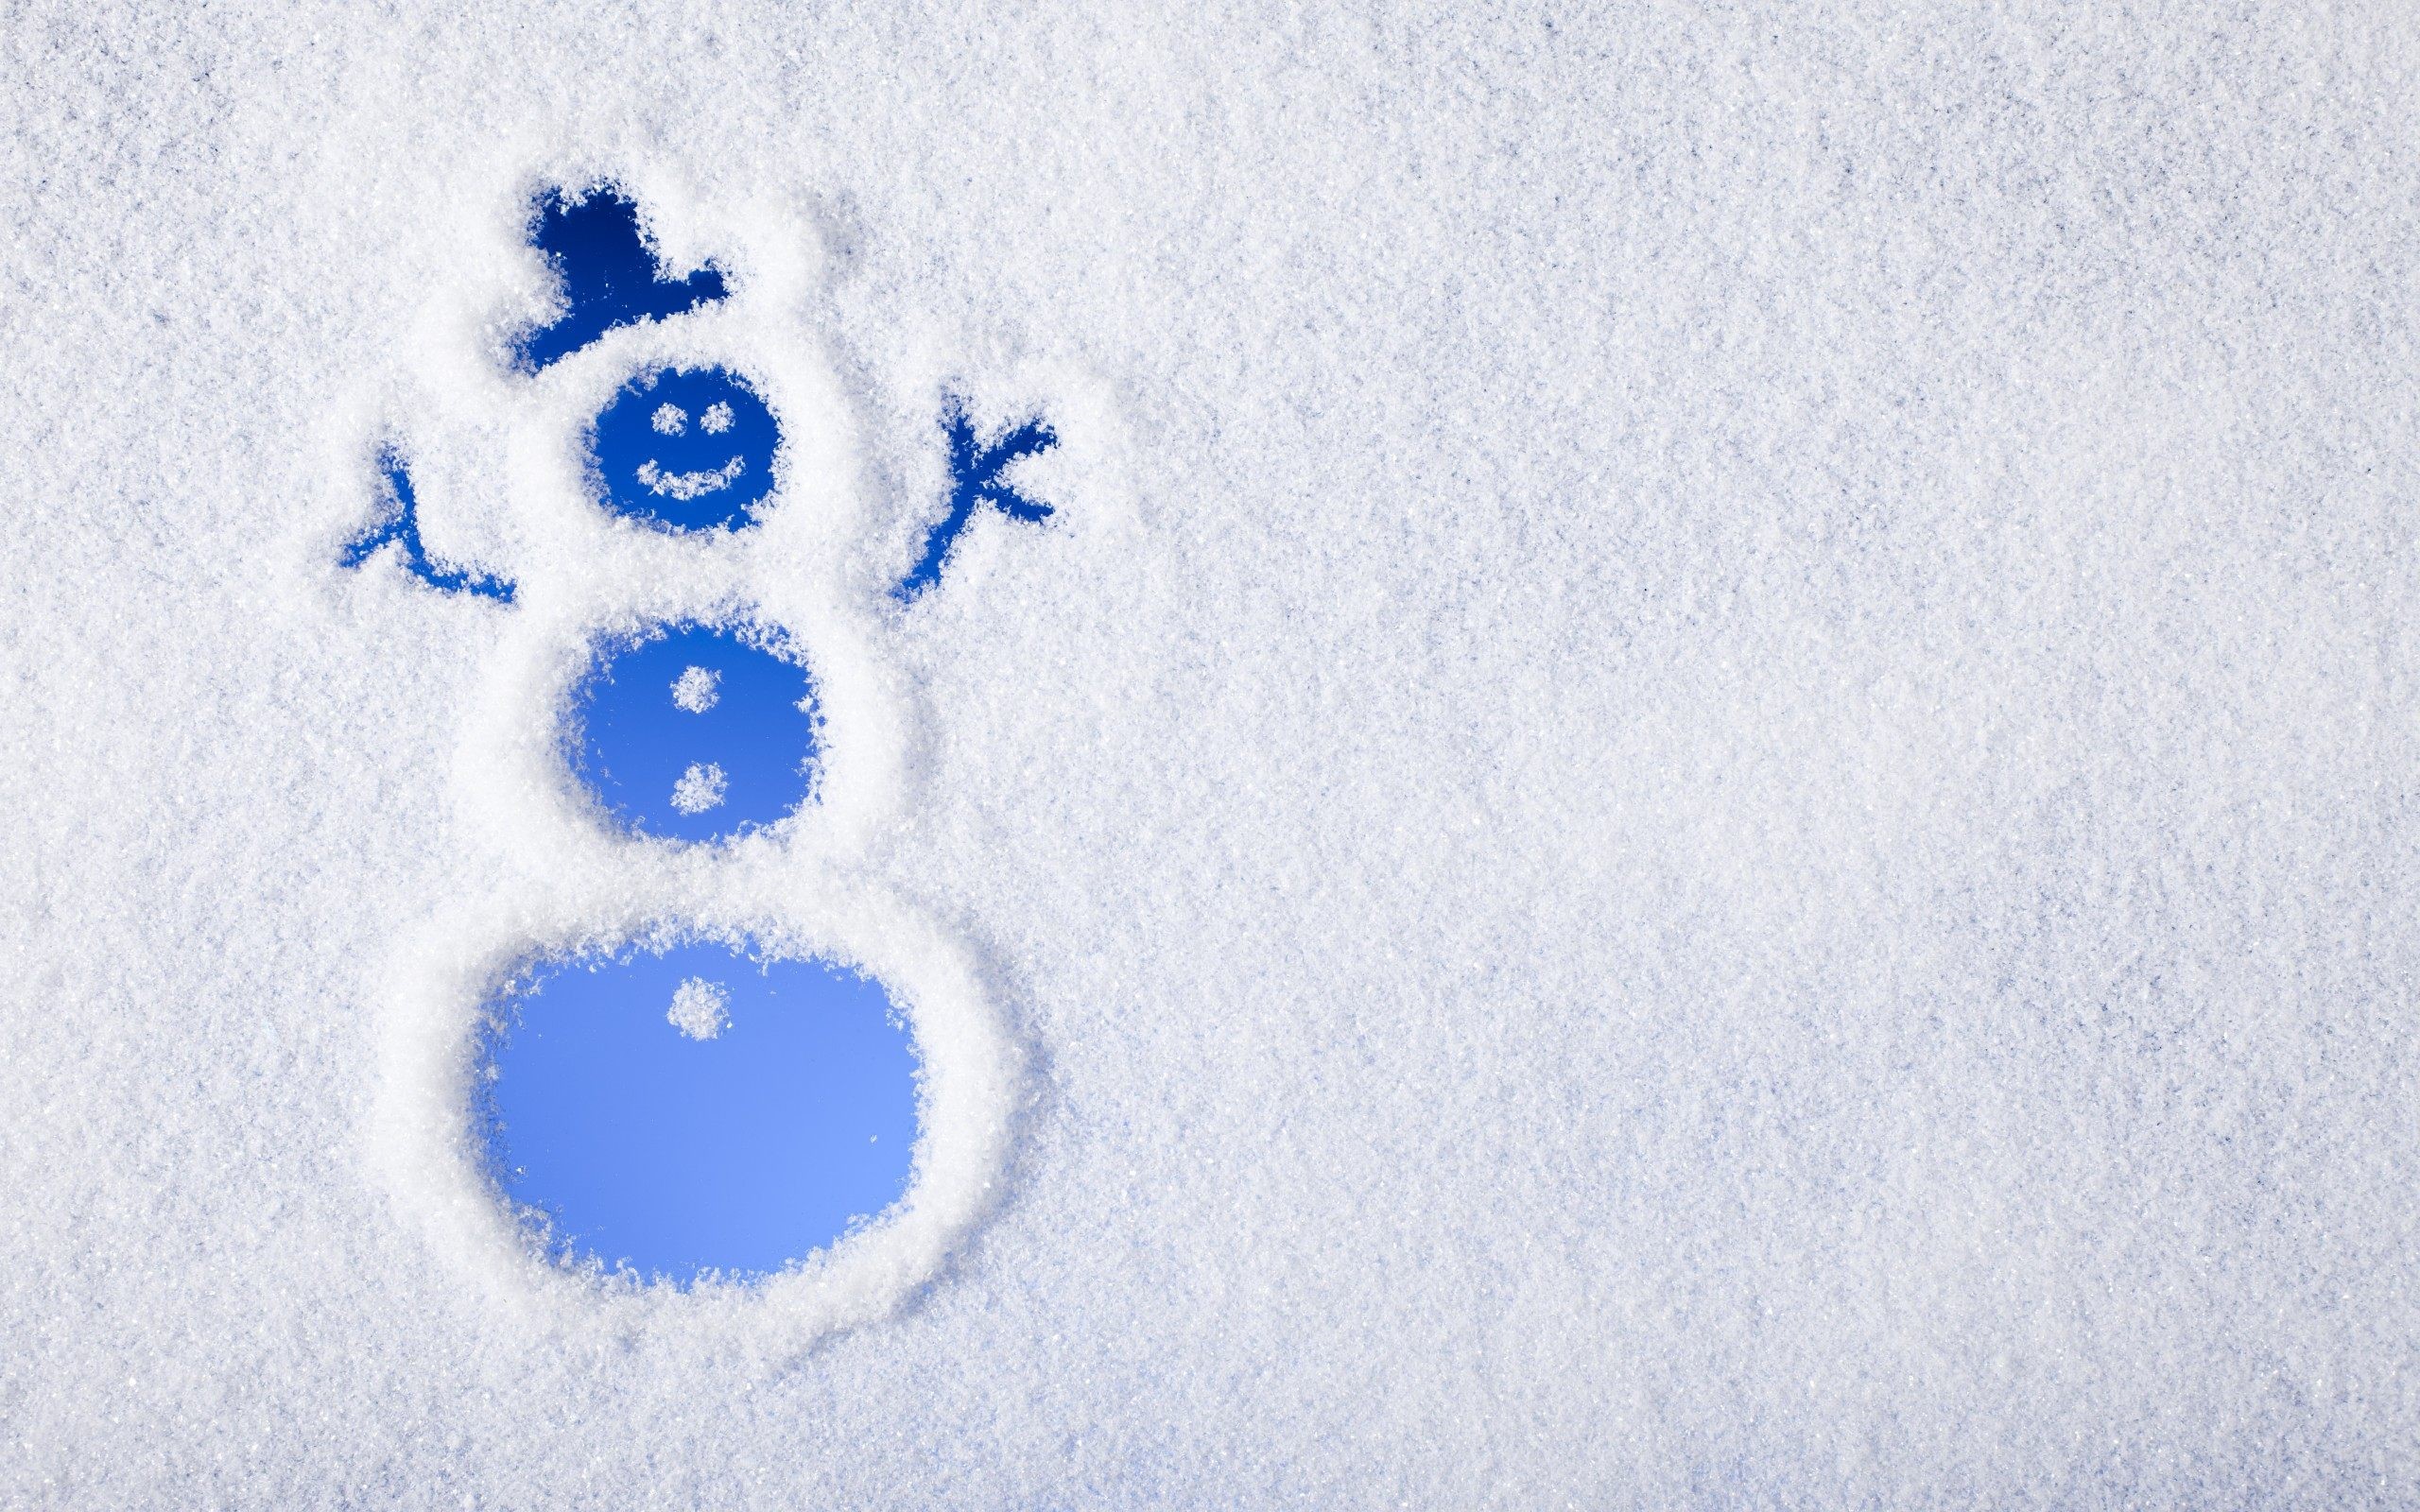 2560x1600 ... snowman art wallpaper hd free download of frosty snowman ...